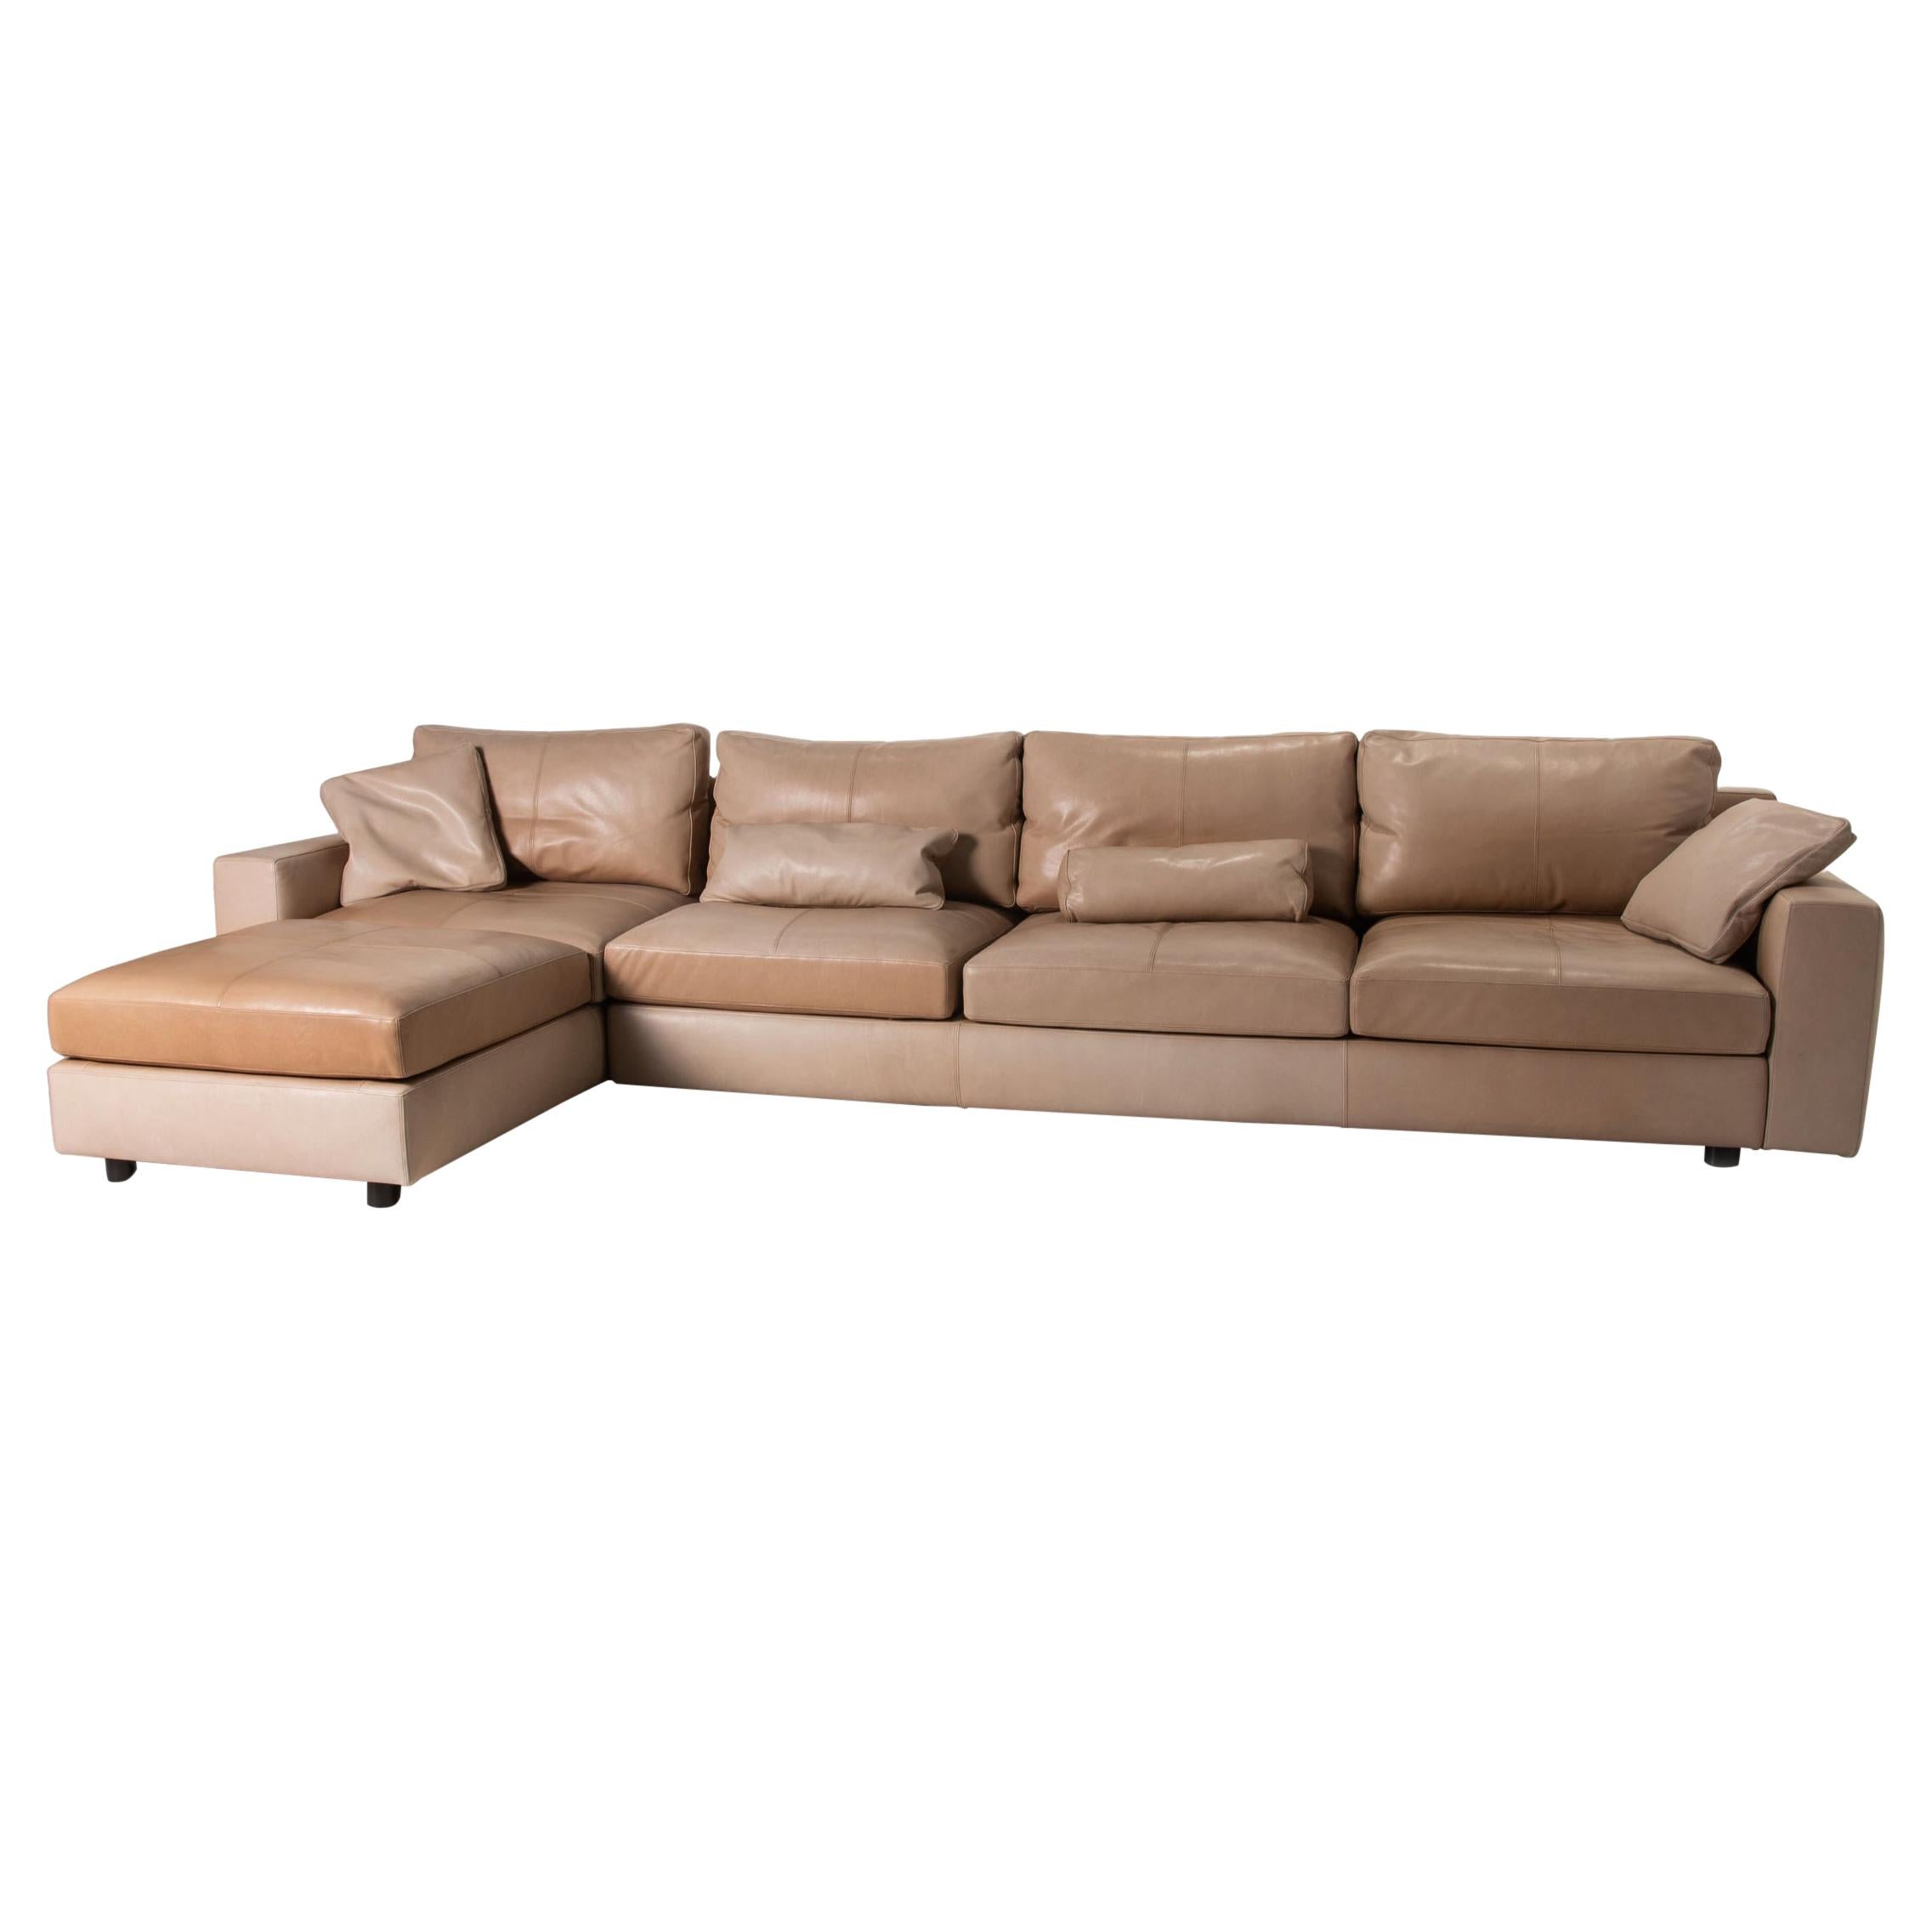 Poltrona Frau Massimosistema Leather Sofa Beige Corner Sofa Couch For Sale